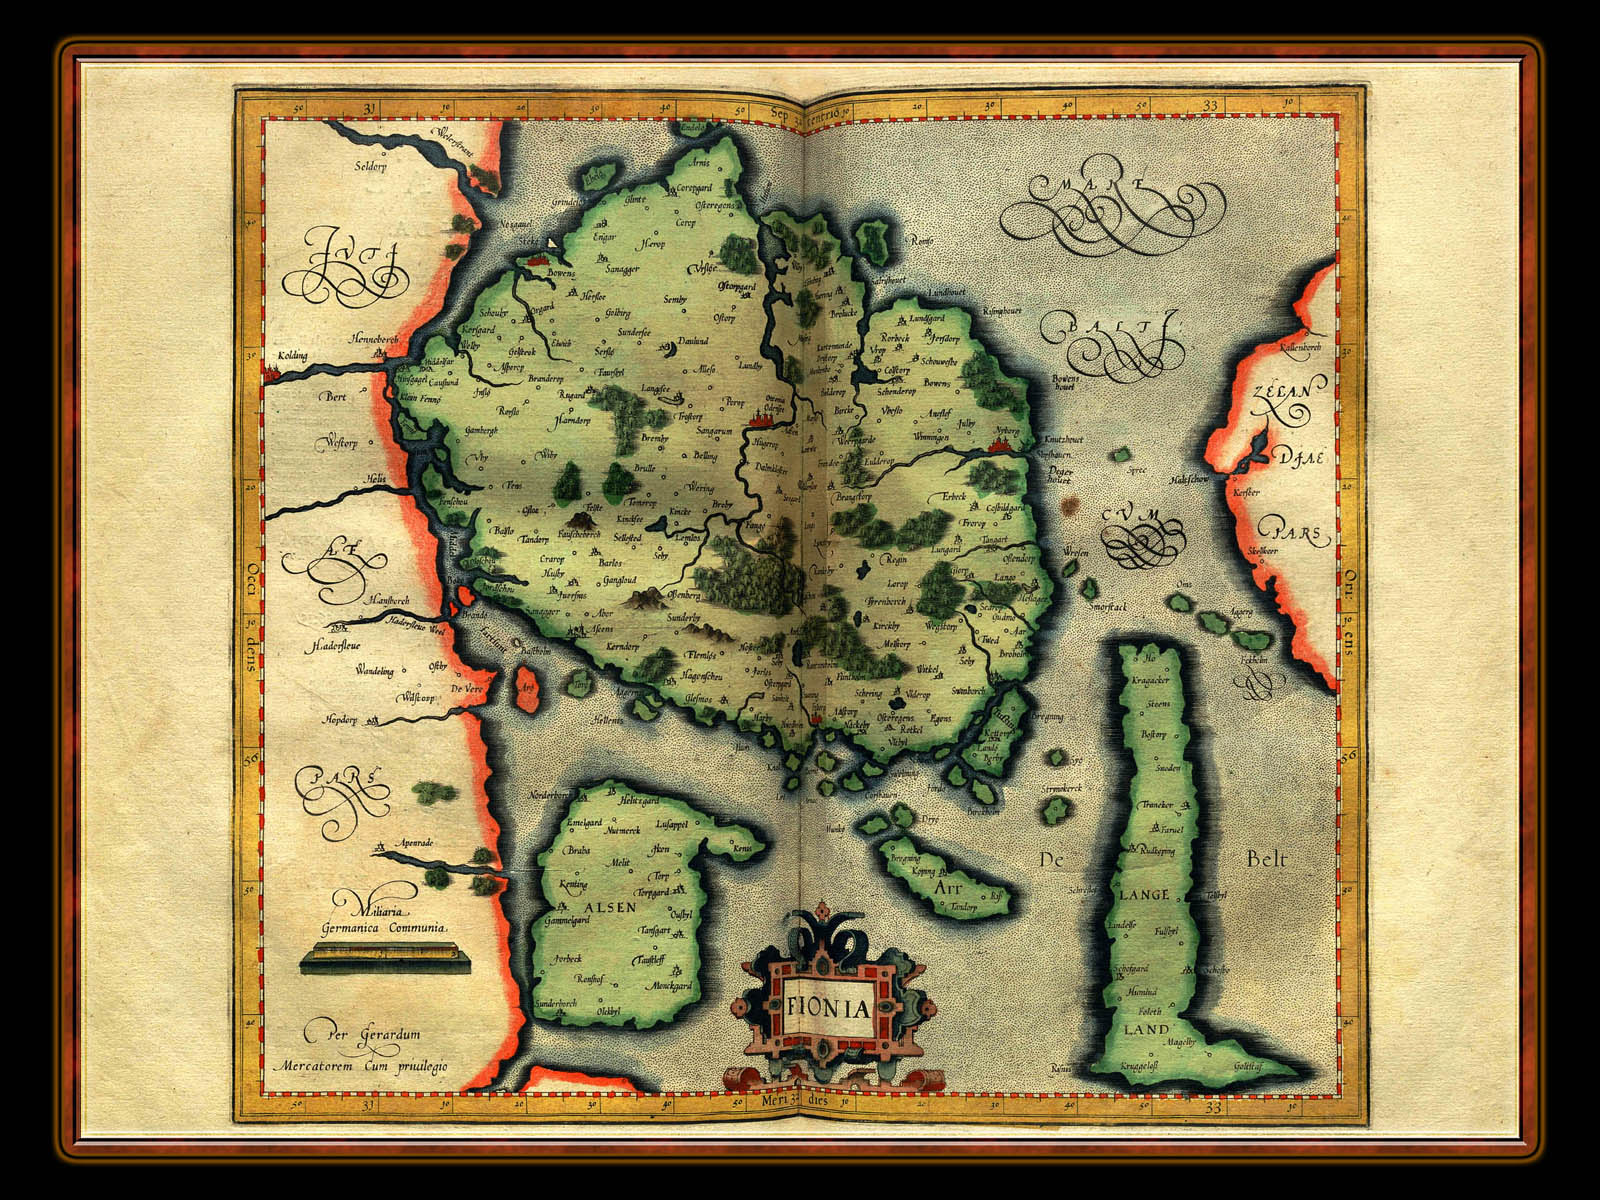 "Gerhard Mercator 1595 World Atlas - Cosmographicae" - Wallpaper No. 78 of 106. Right click for saving options.